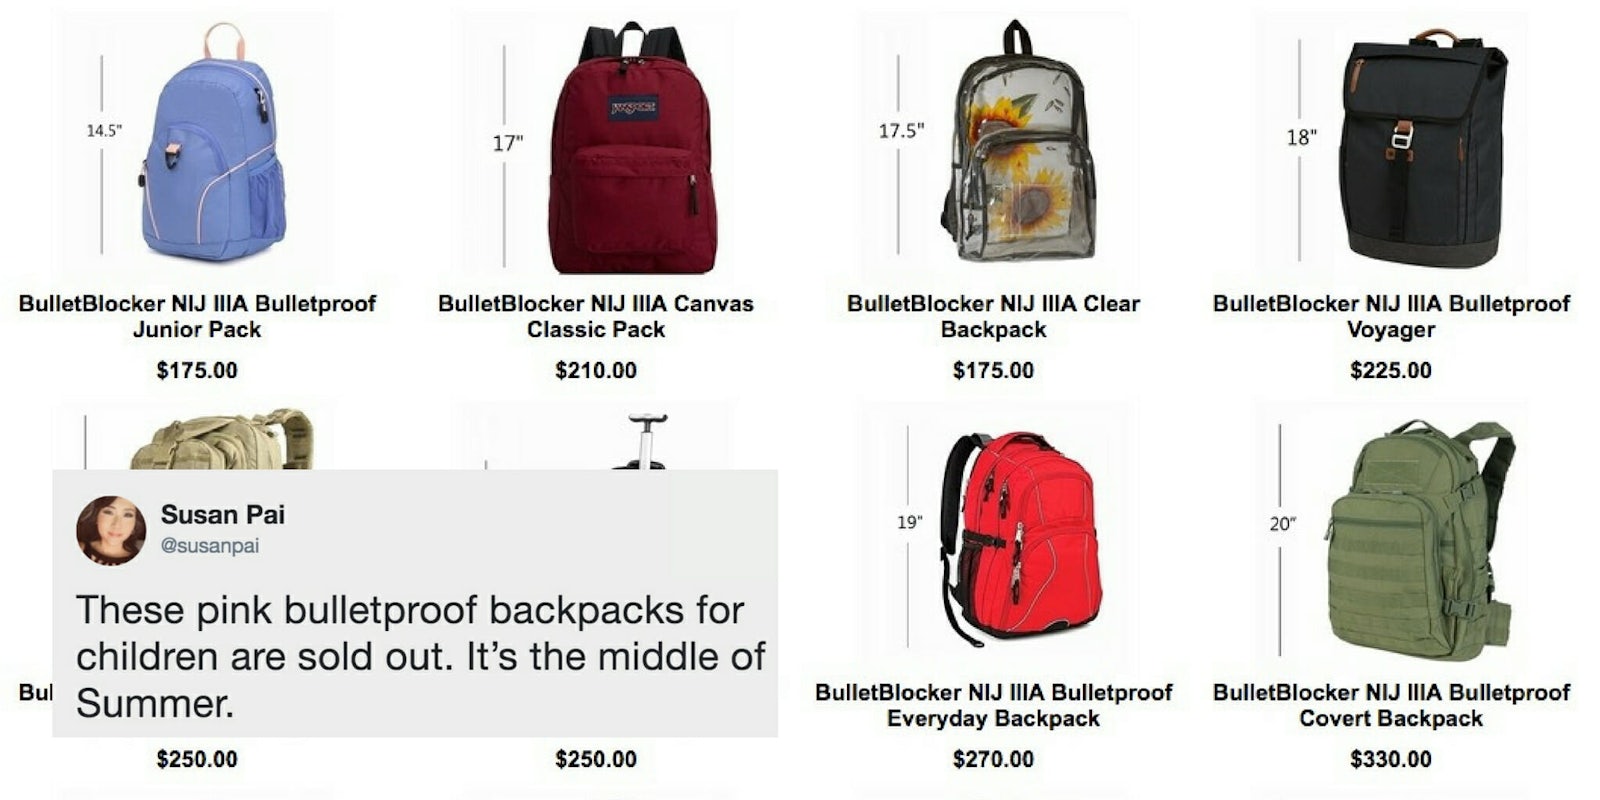 Bulletproof backpacks for back to school shopping.